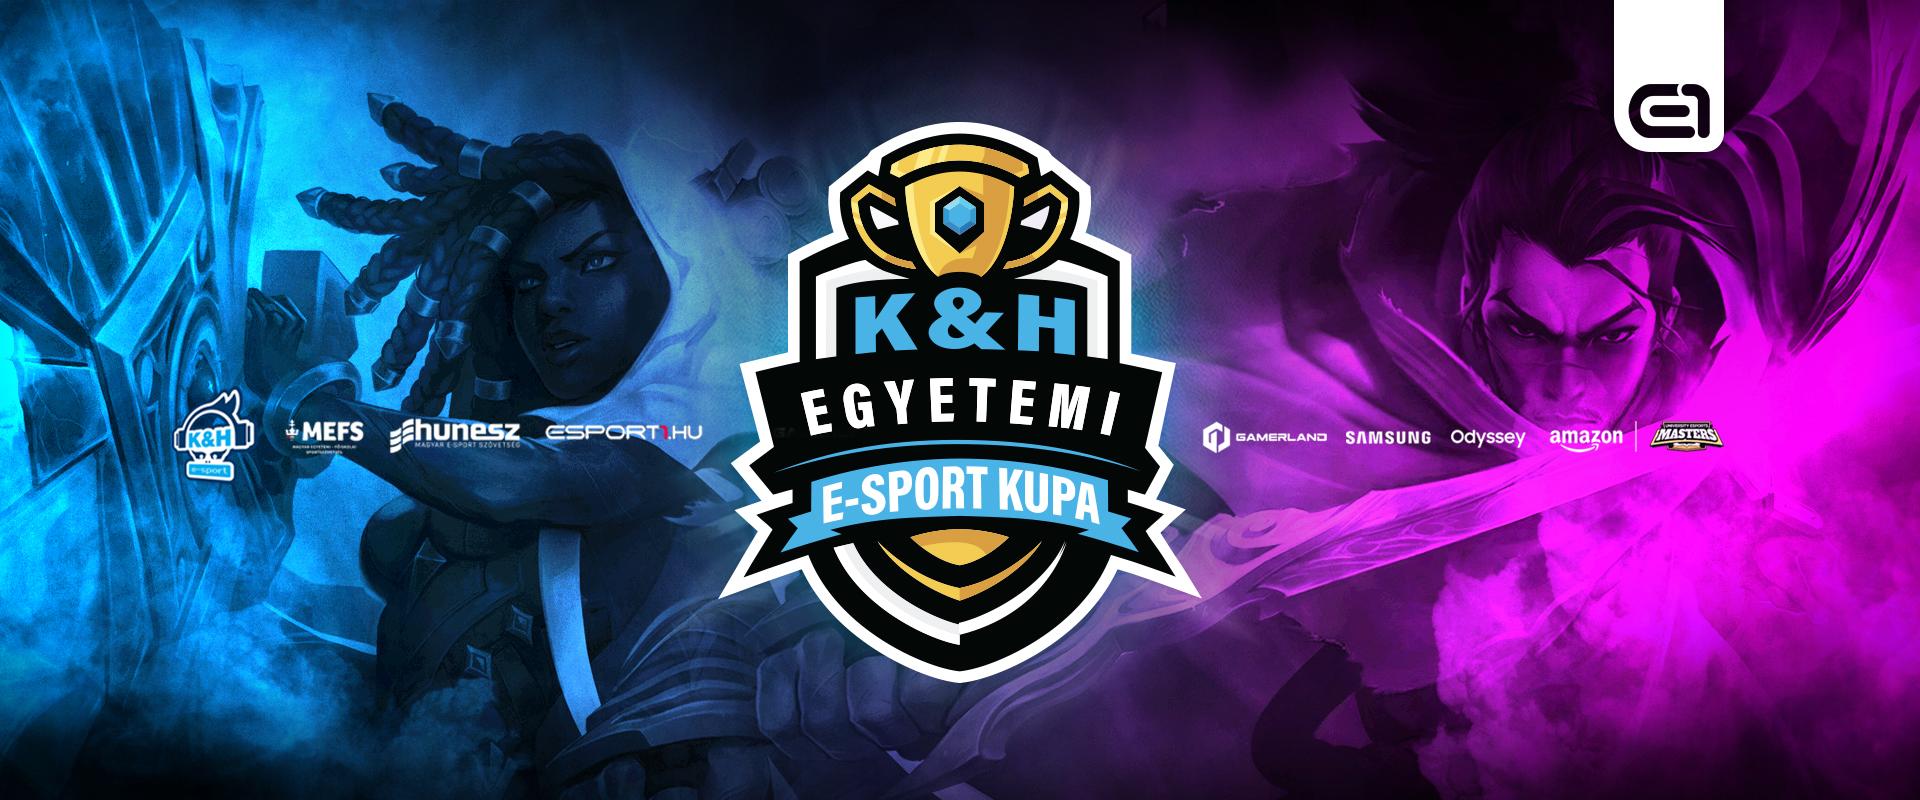 League of Legends: Indul a K&H Egyetemi E-sport Kupa csoportköre!